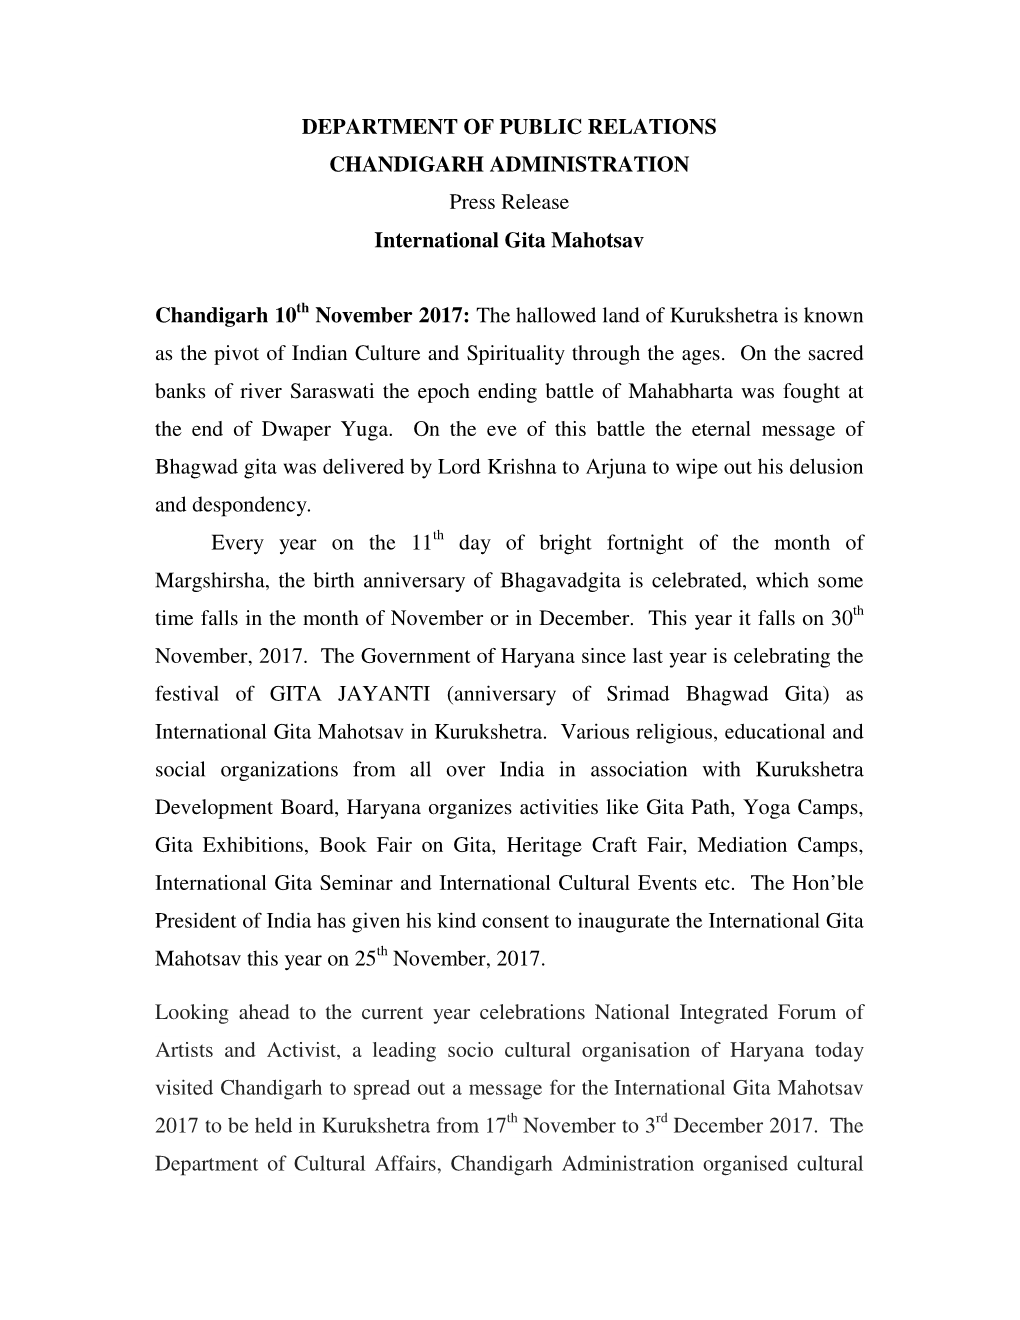 DEPARTMENT of PUBLIC RELATIONS CHANDIGARH ADMINISTRATION Press Release International Gita Mahotsav Chandigarh 10 November 2017